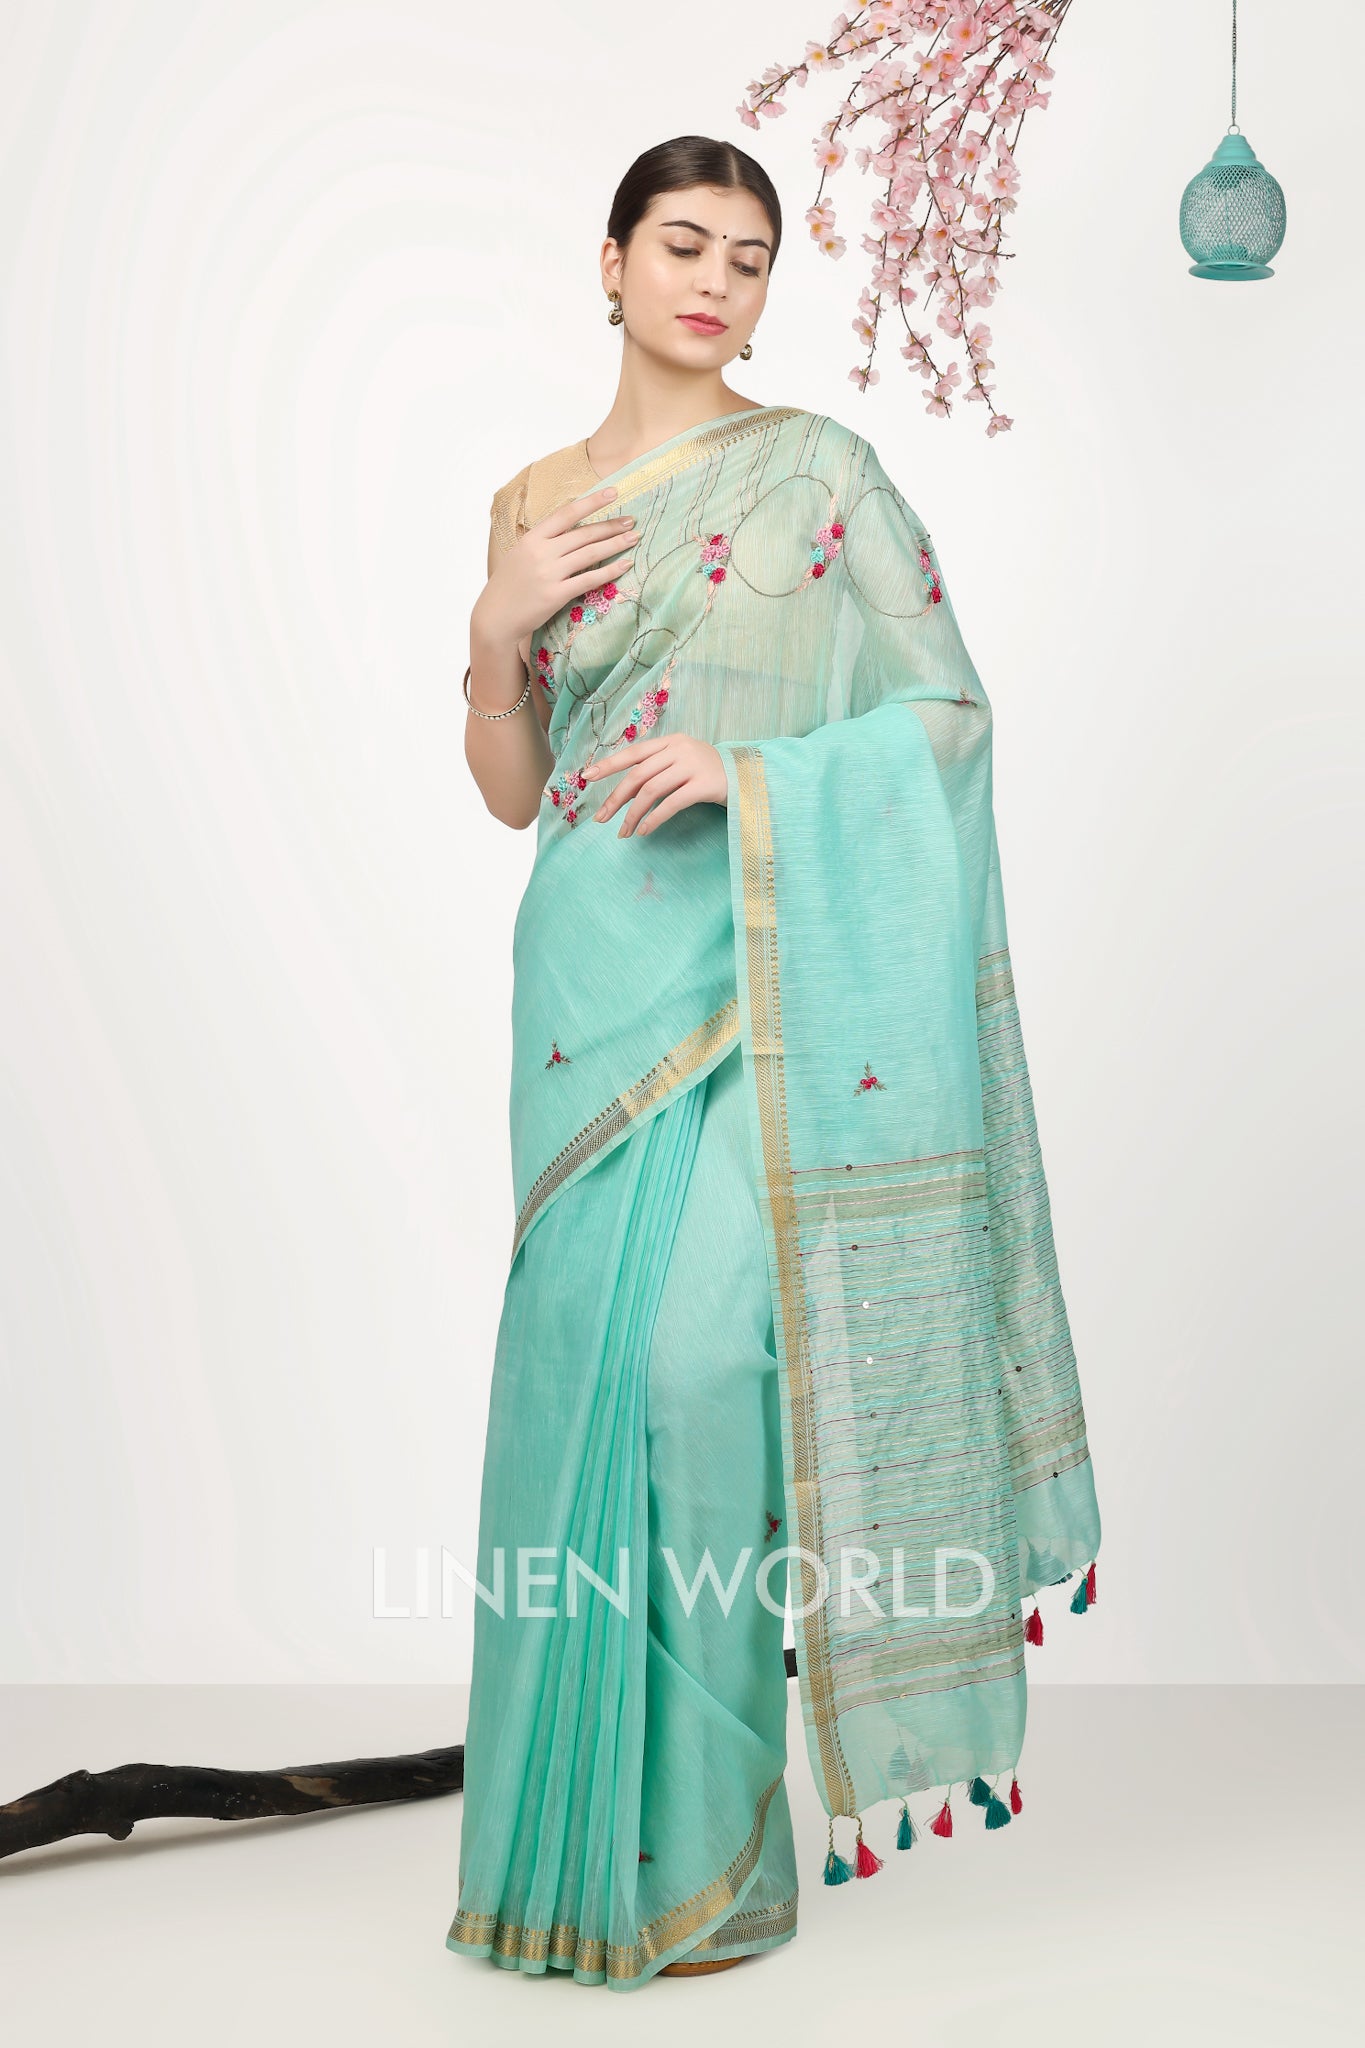 sara - french knot turquoise silk linen sari - linenworldonline.in